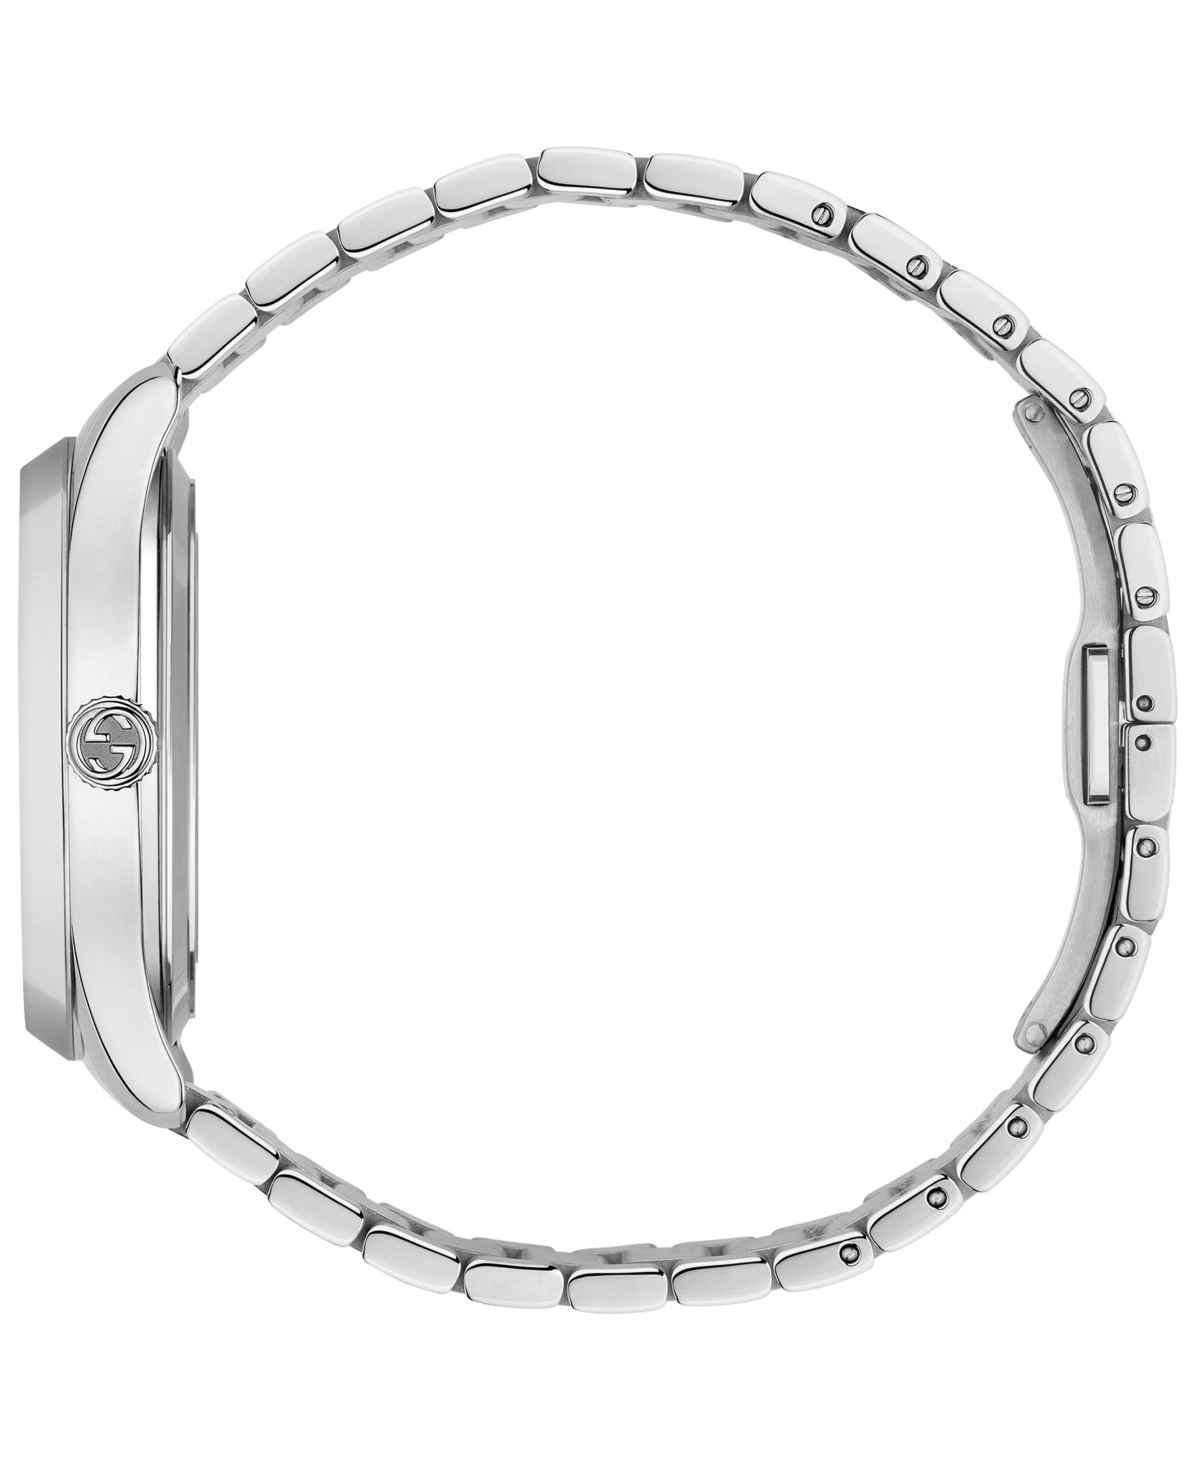 Shop Gucci Unisex Swiss Automatic Stainless Steel Bracelet Watch 38mm